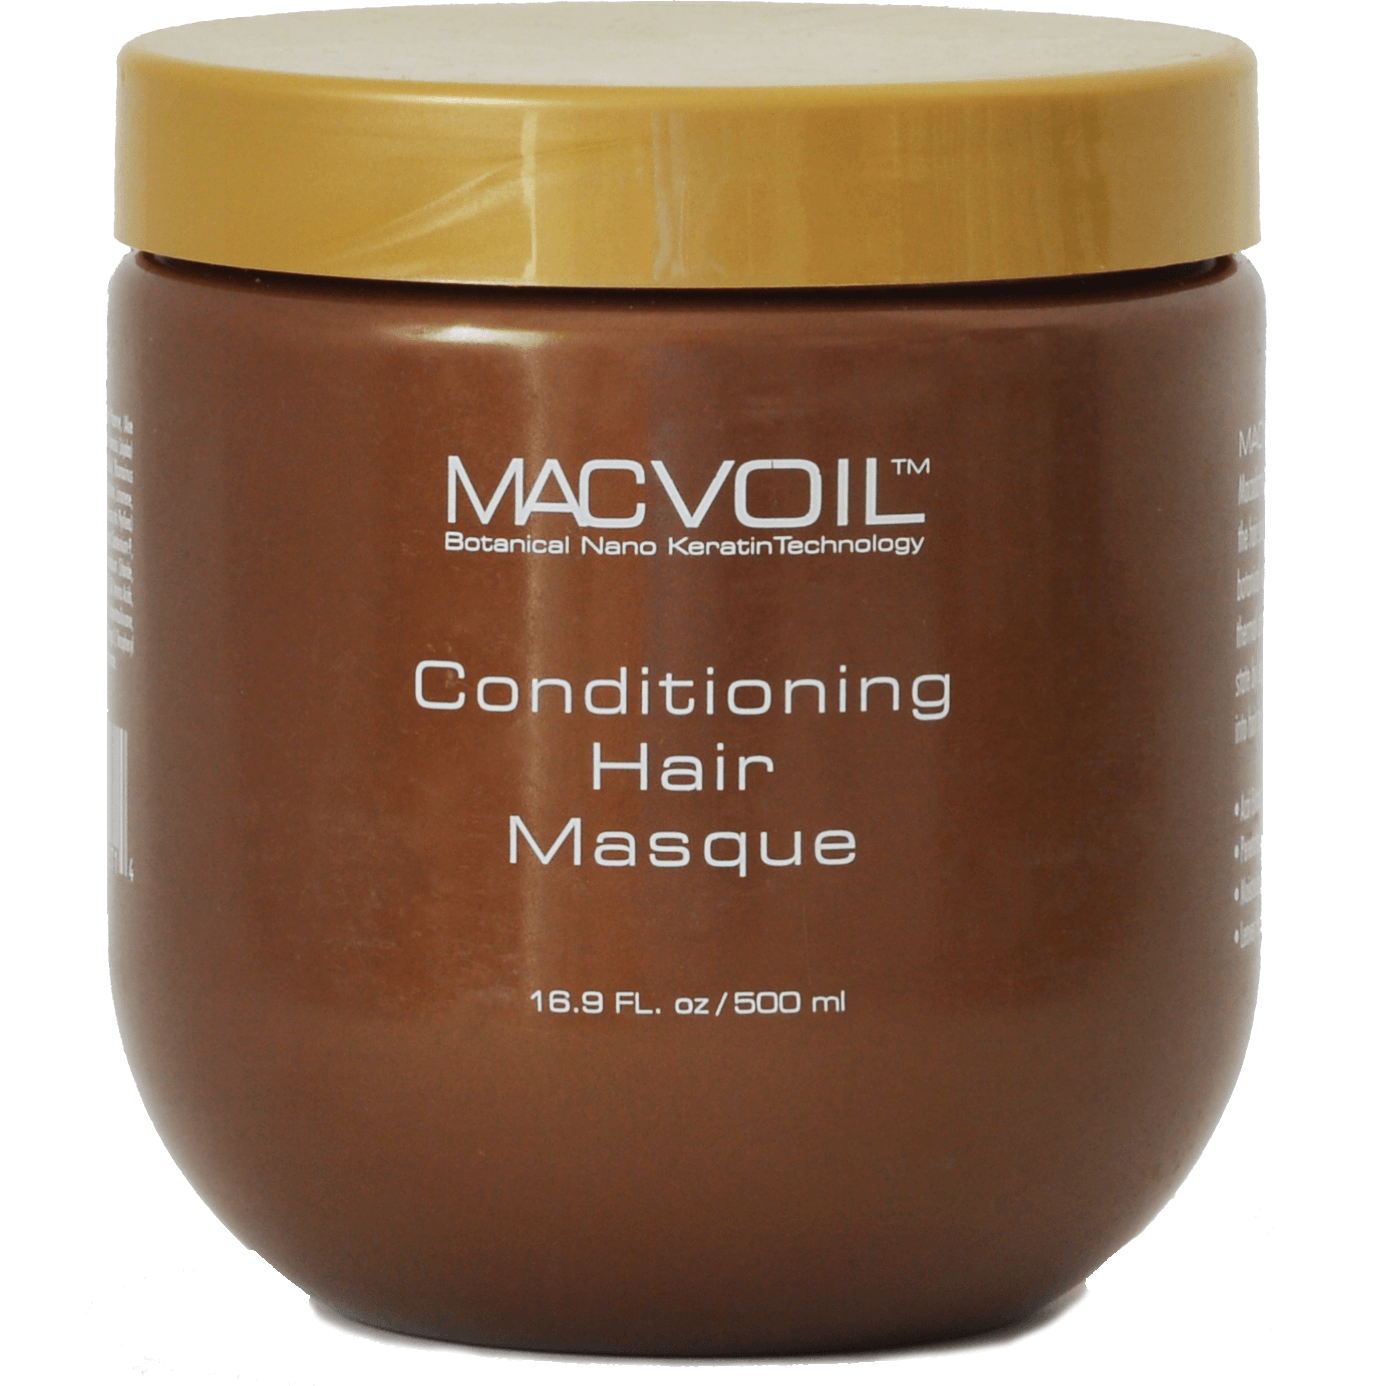 Conditioning Hair Masque - Macvoil